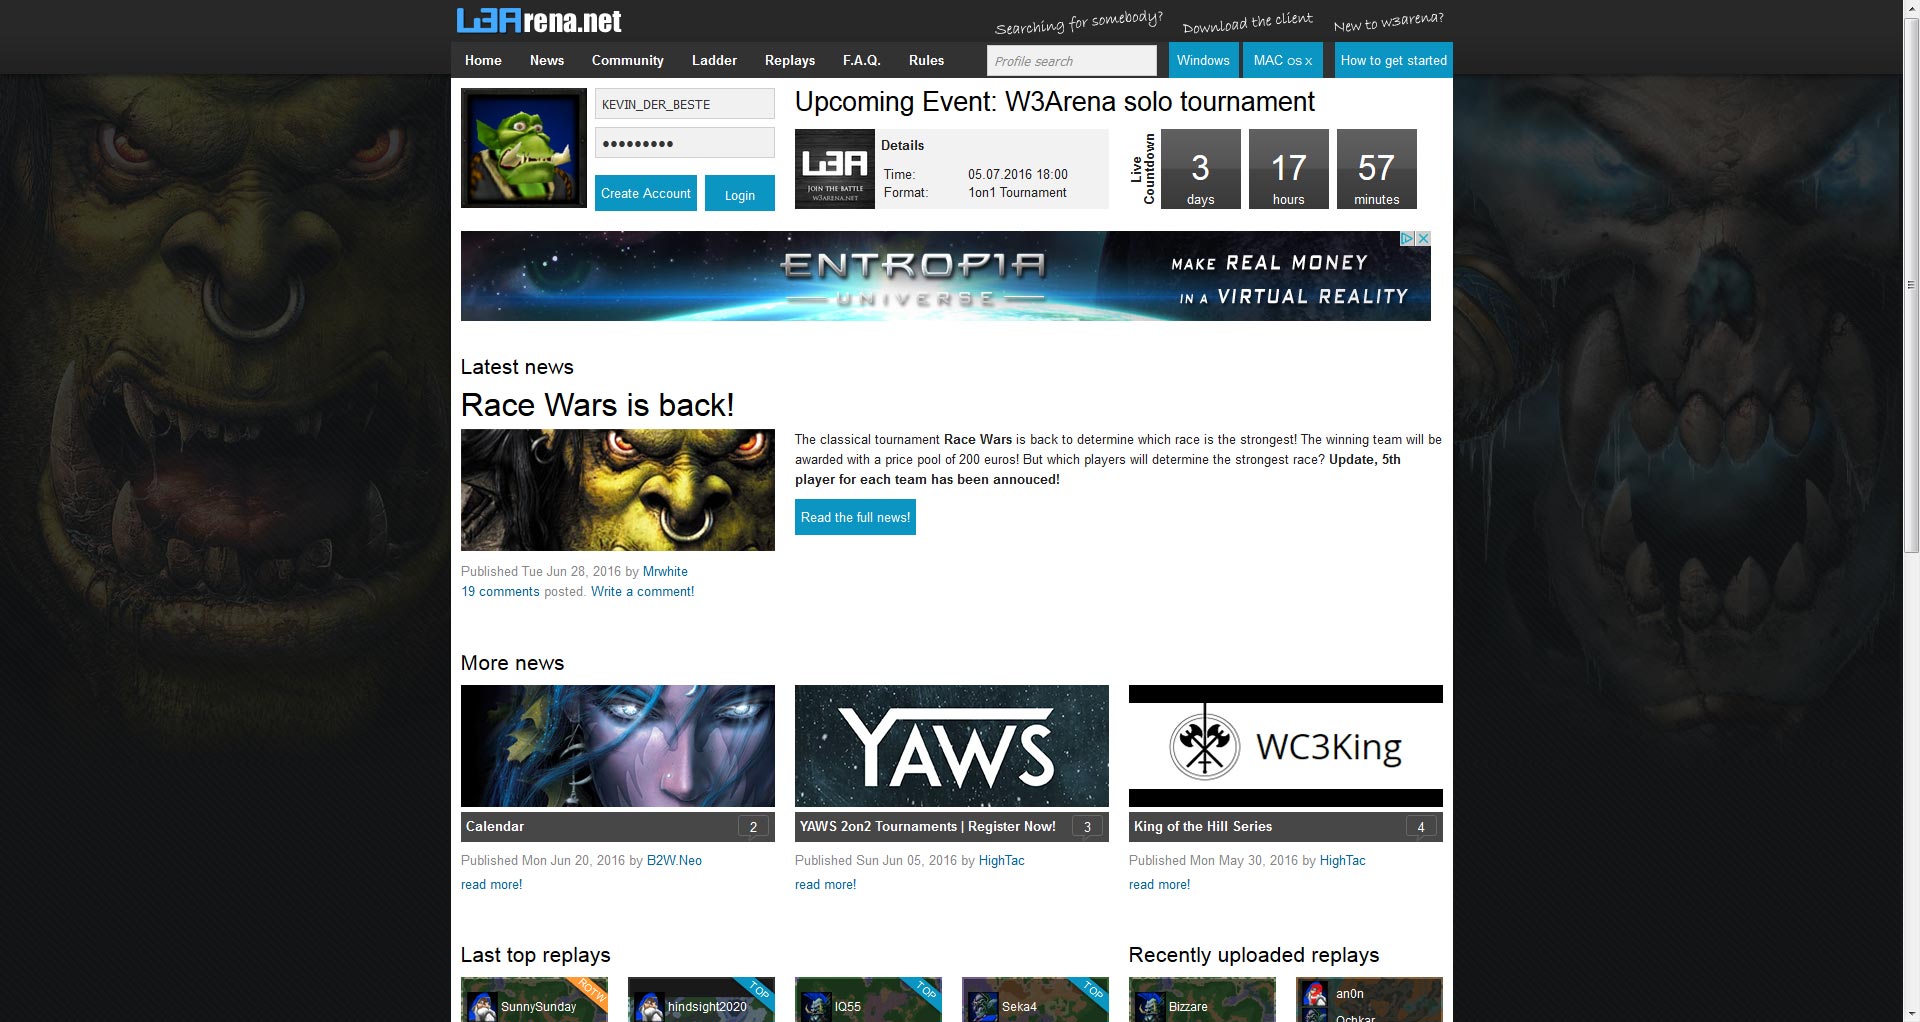 w3arena-homepage-warcraft-progamer-ladder